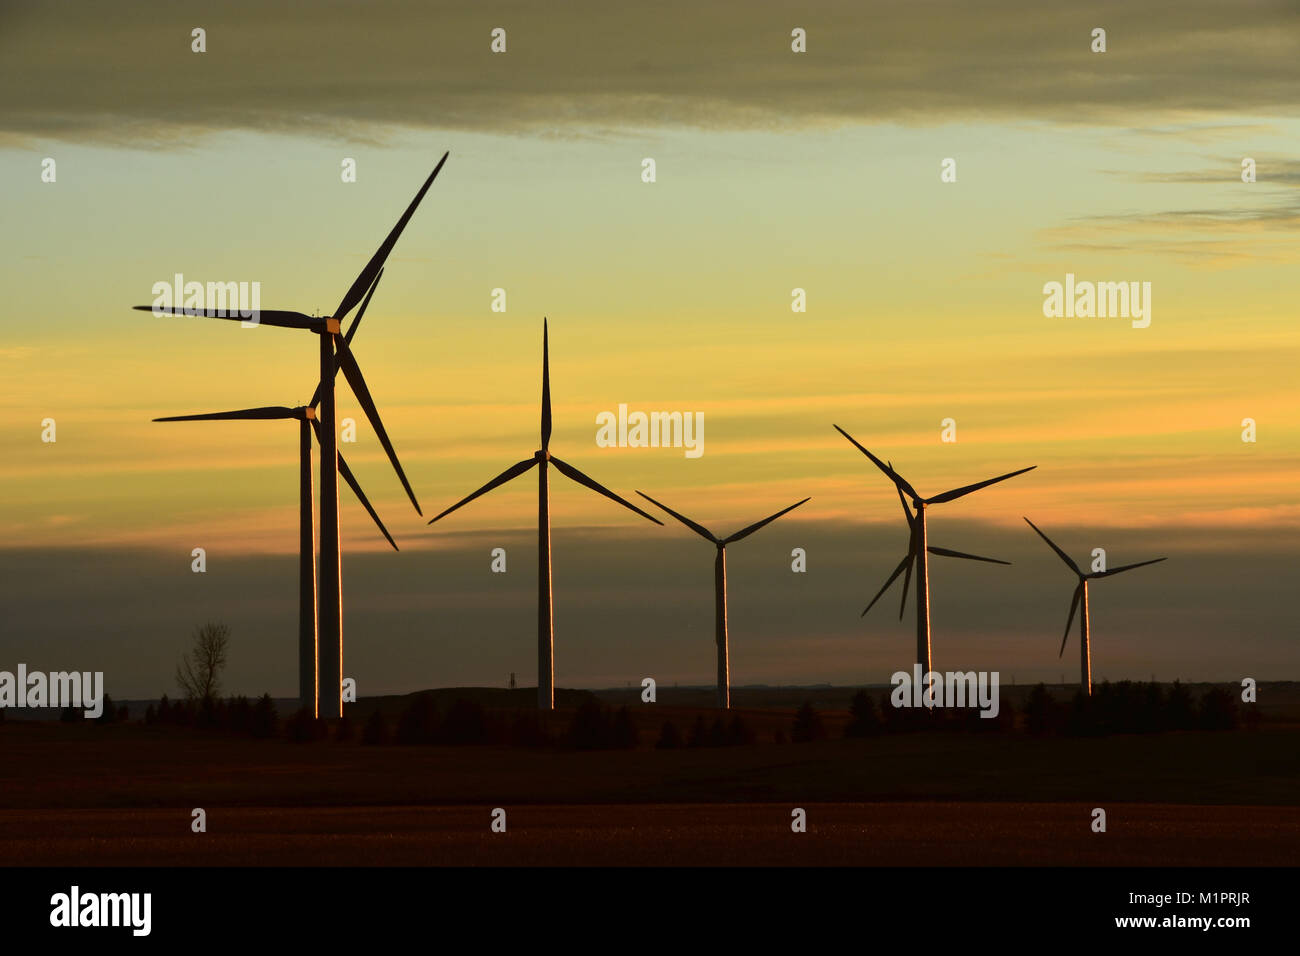 Wind turbine farm producing clean renewable electricity in North Dakota at sunset. Stock Photo